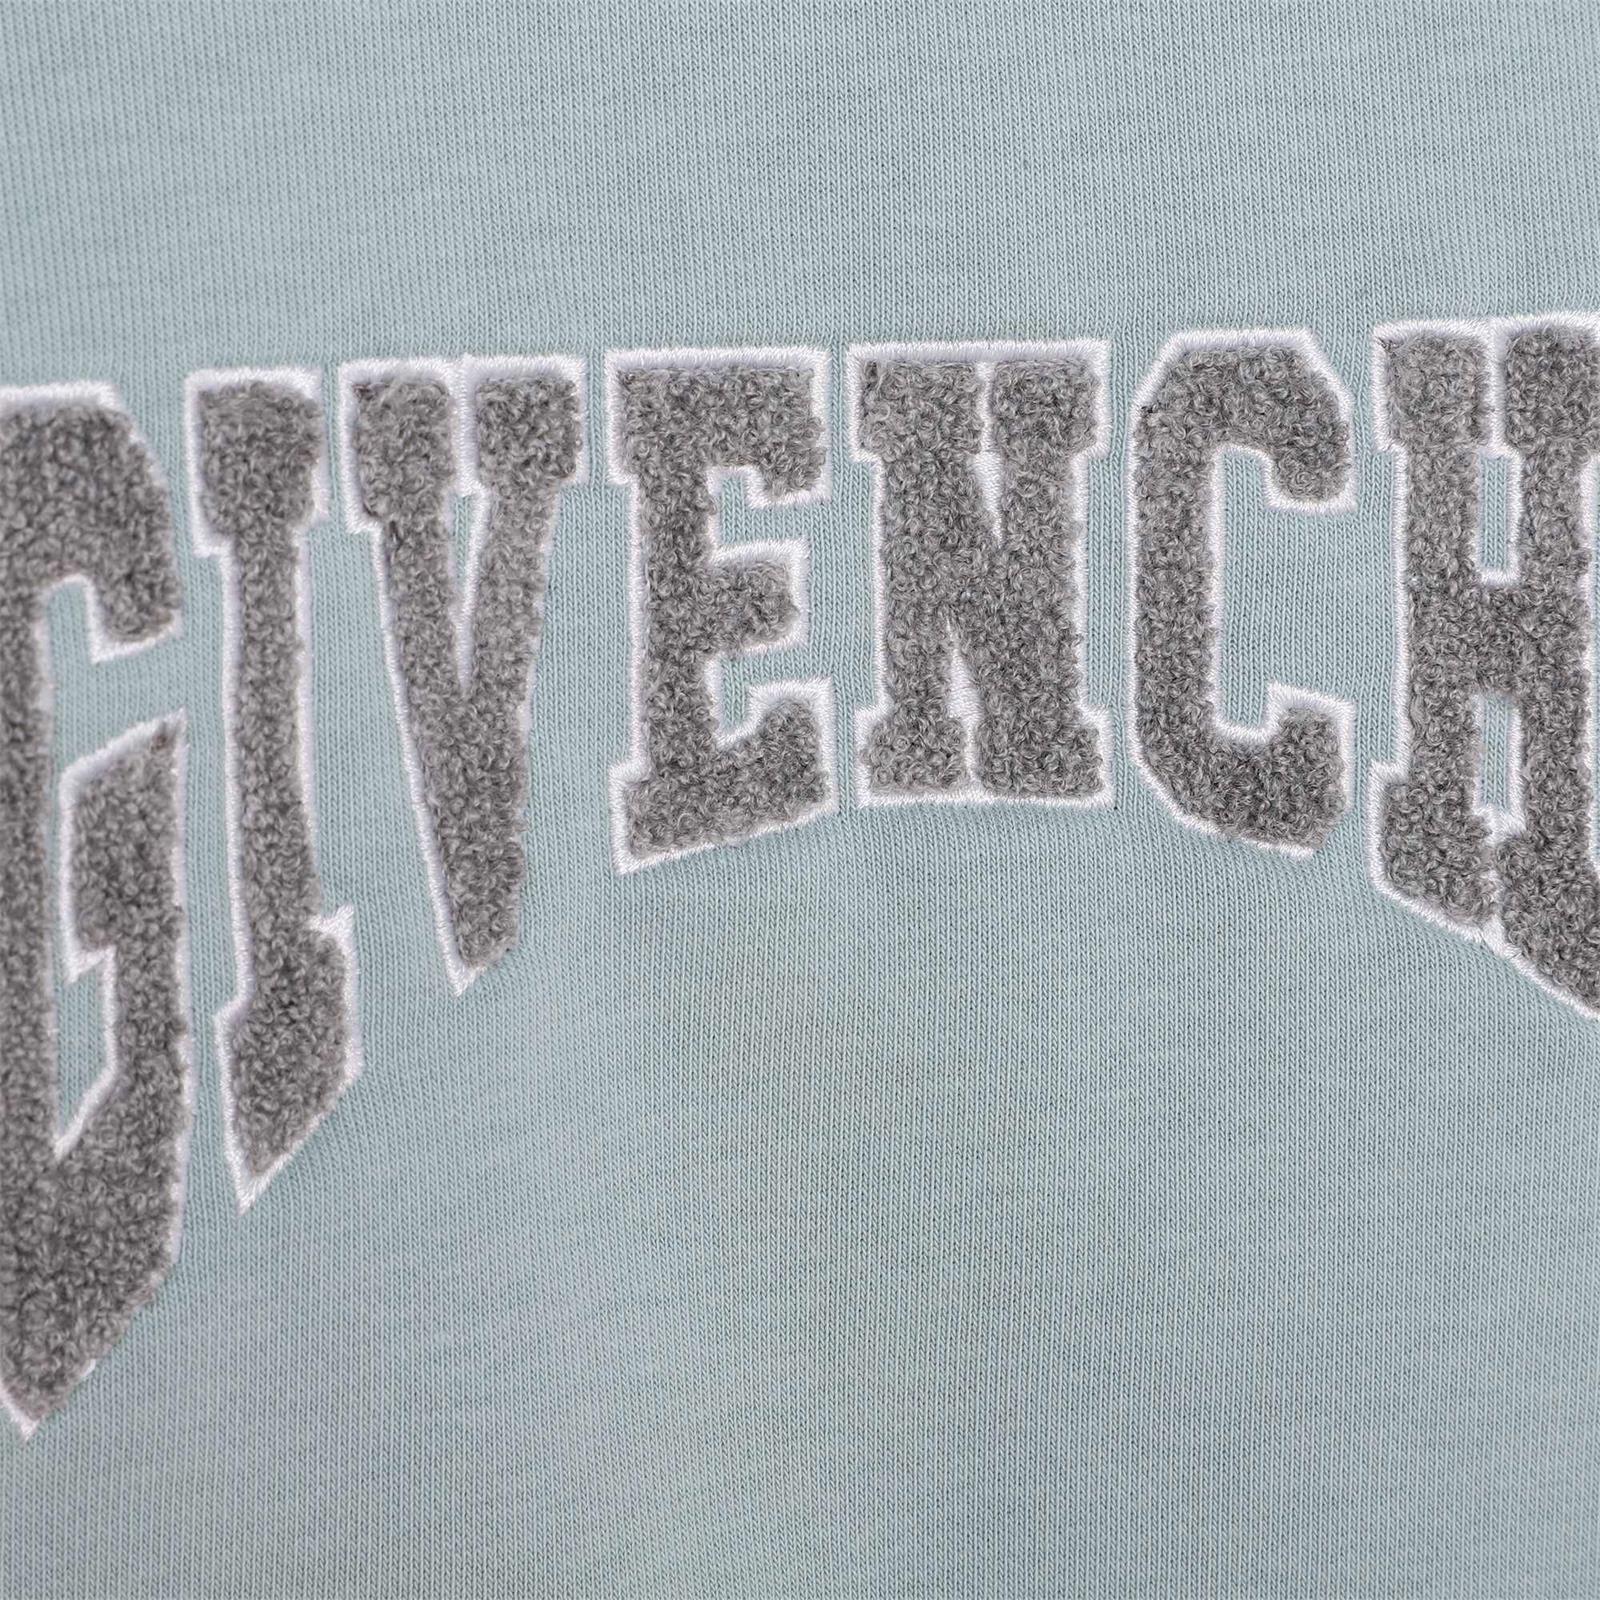 Givenchy Baby Boys Pale Blue Sweatshirt